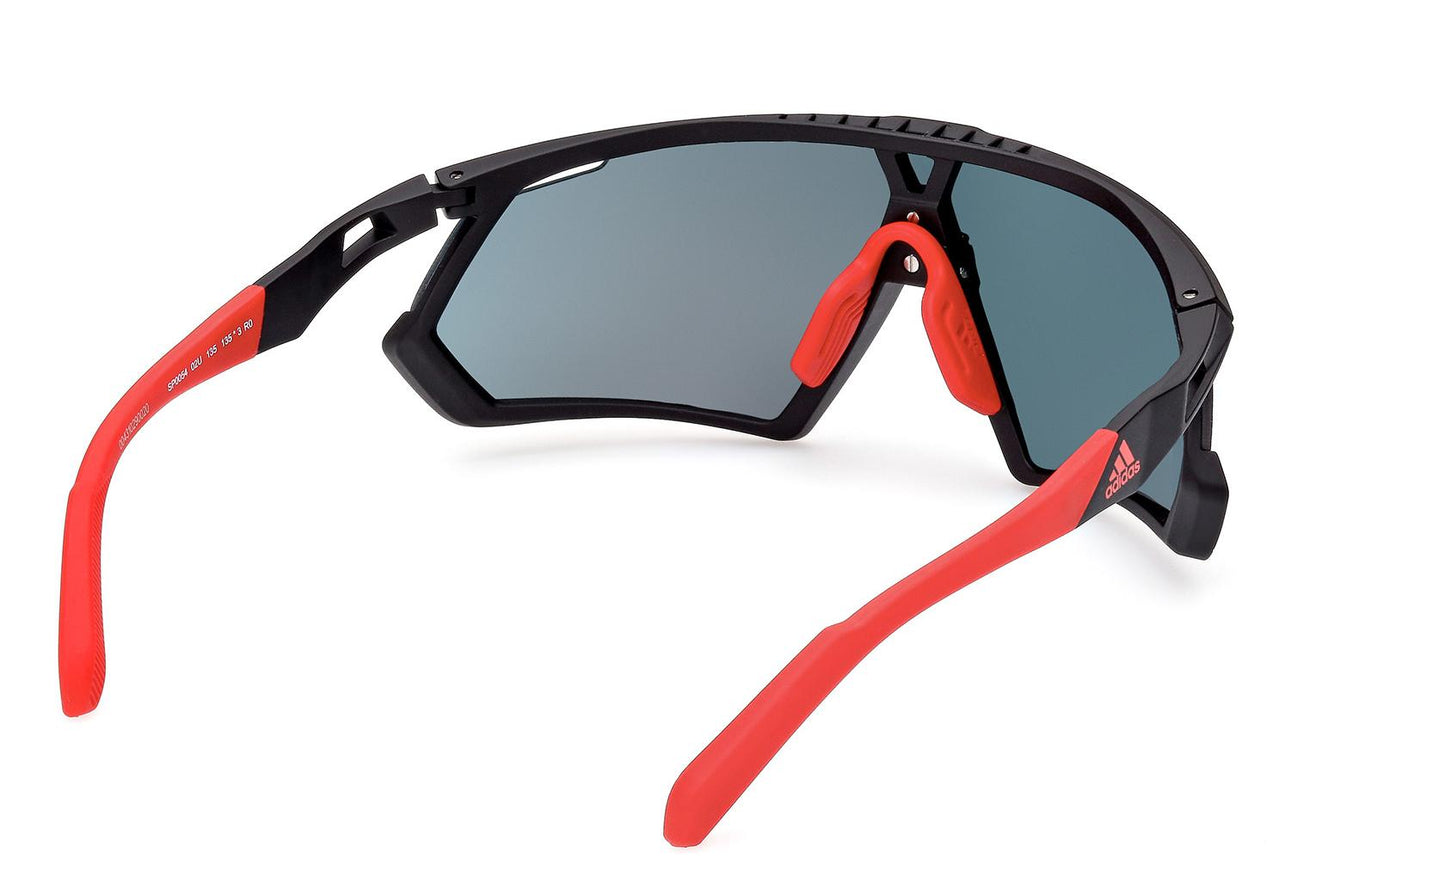 Adidas Sport Sunglasses 02U MATTE BLACK